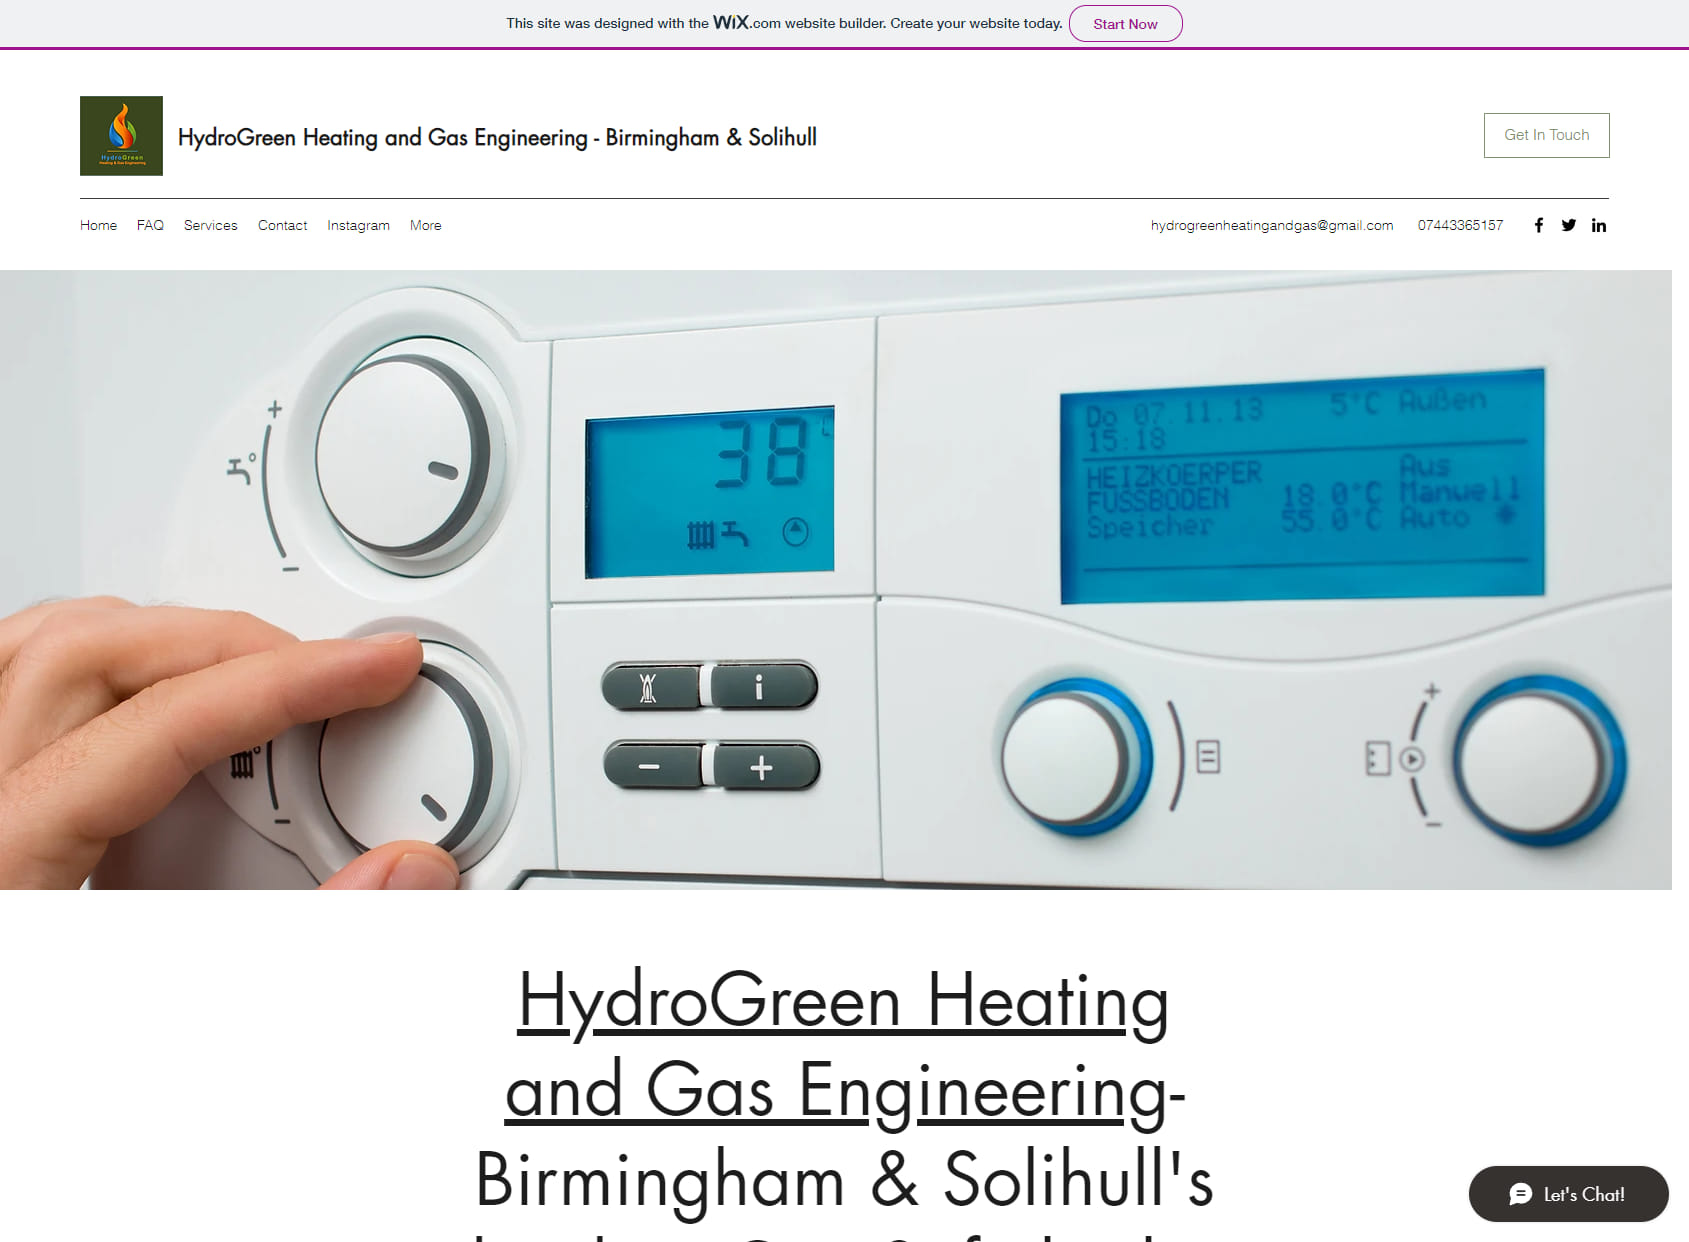 HydroGreen Heating and Gas Engineering - Birmingham & Solihull